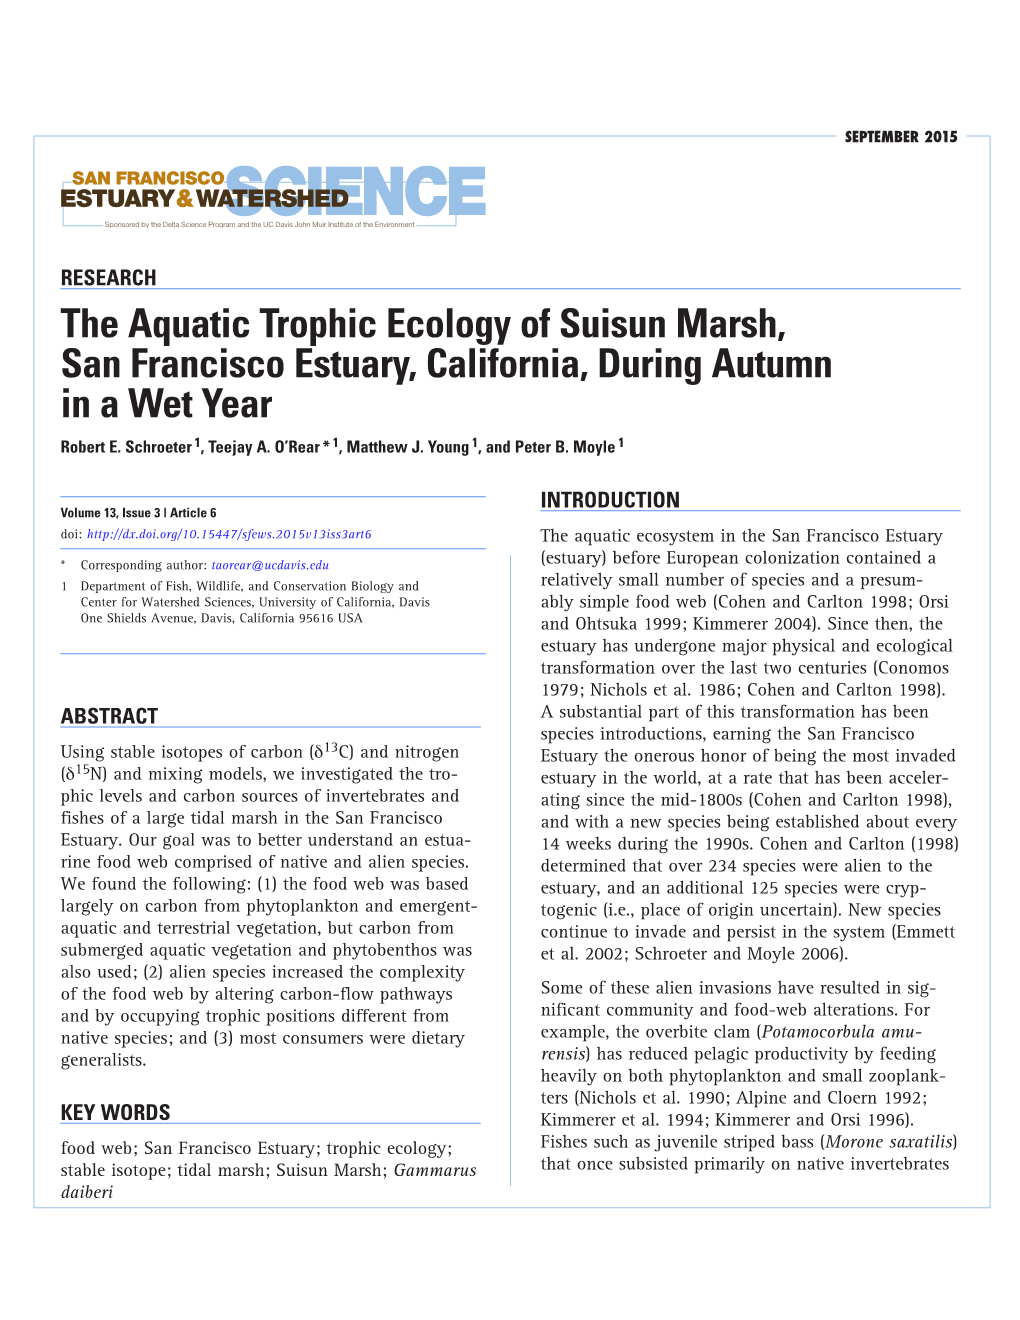 The Aquatic Trophic Ecology of Suisun Marsh, San Francisco Estuary, California, During Autumn in a Wet Year Robert E